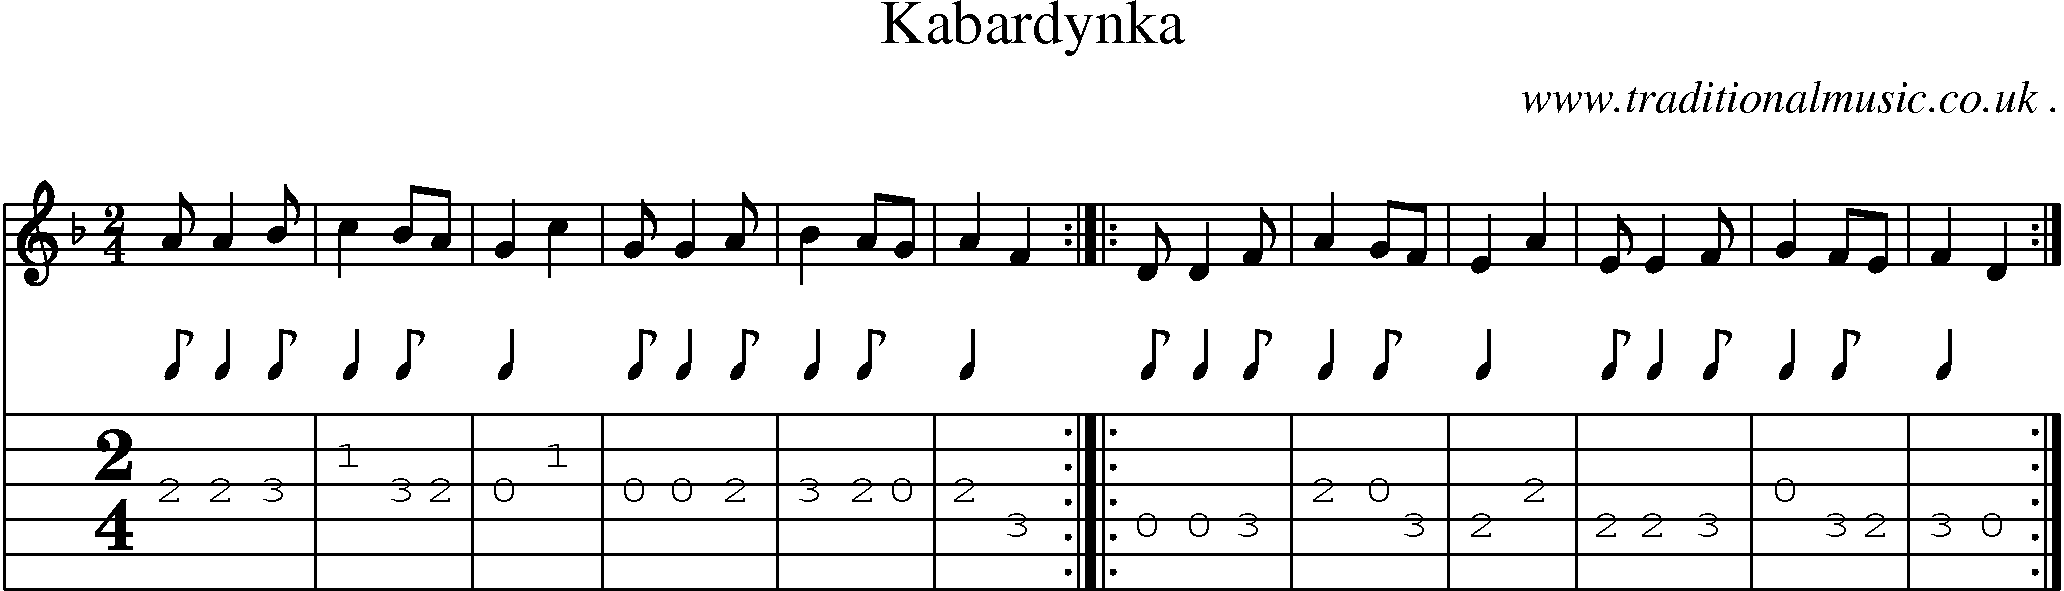 Sheet-Music and Guitar Tabs for Kabardynka